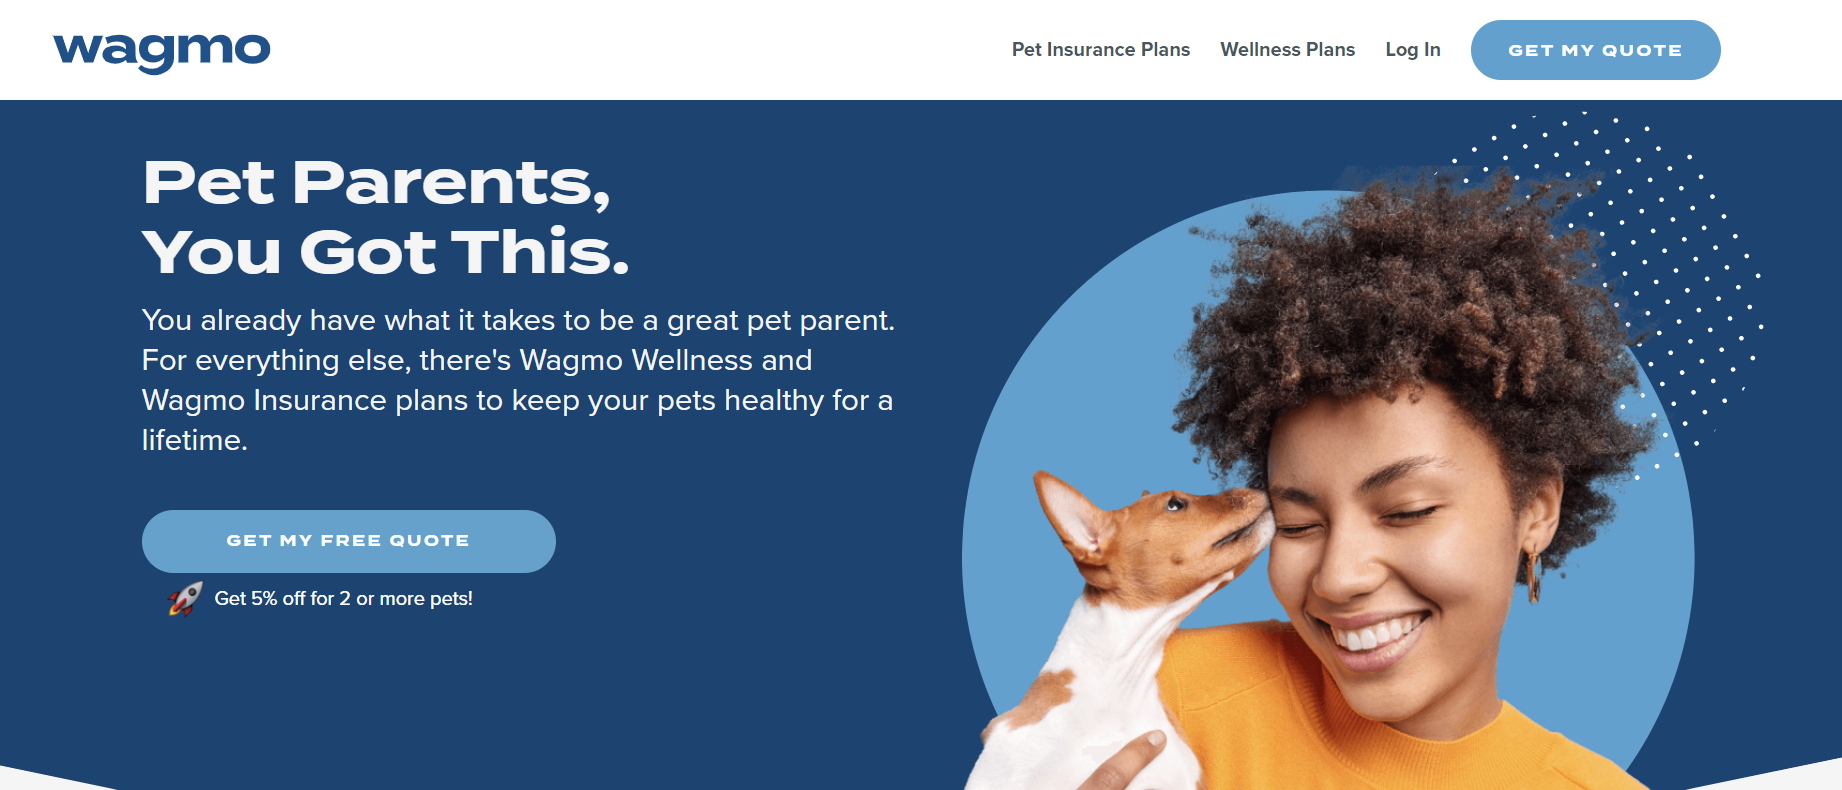 Wagmo is a leading pet care company